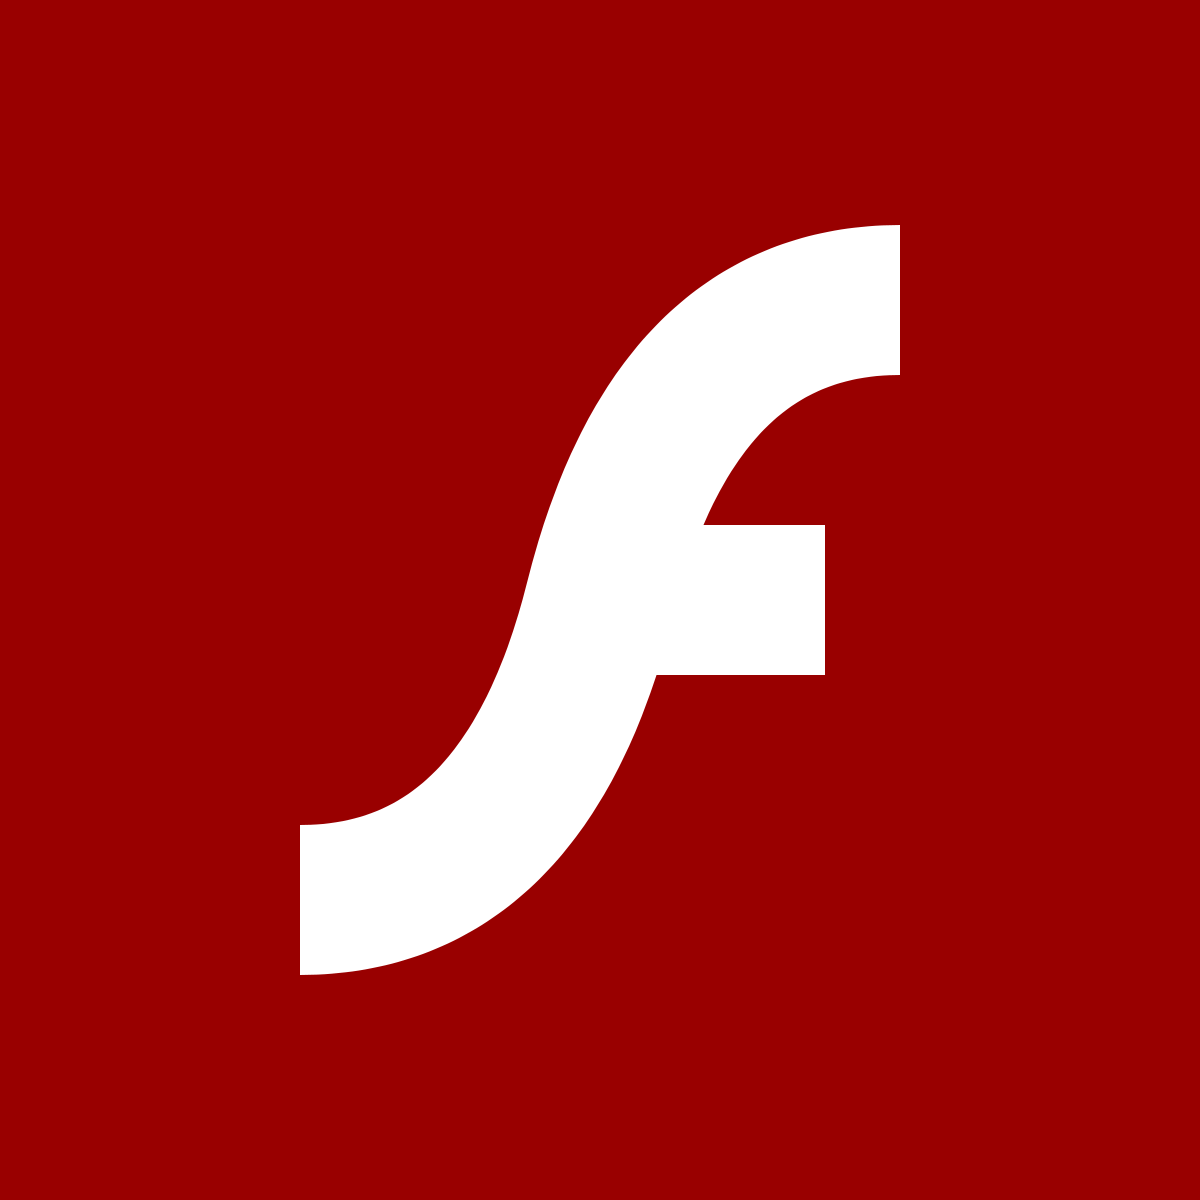 adobe flash player for mac 10.5.8 free download